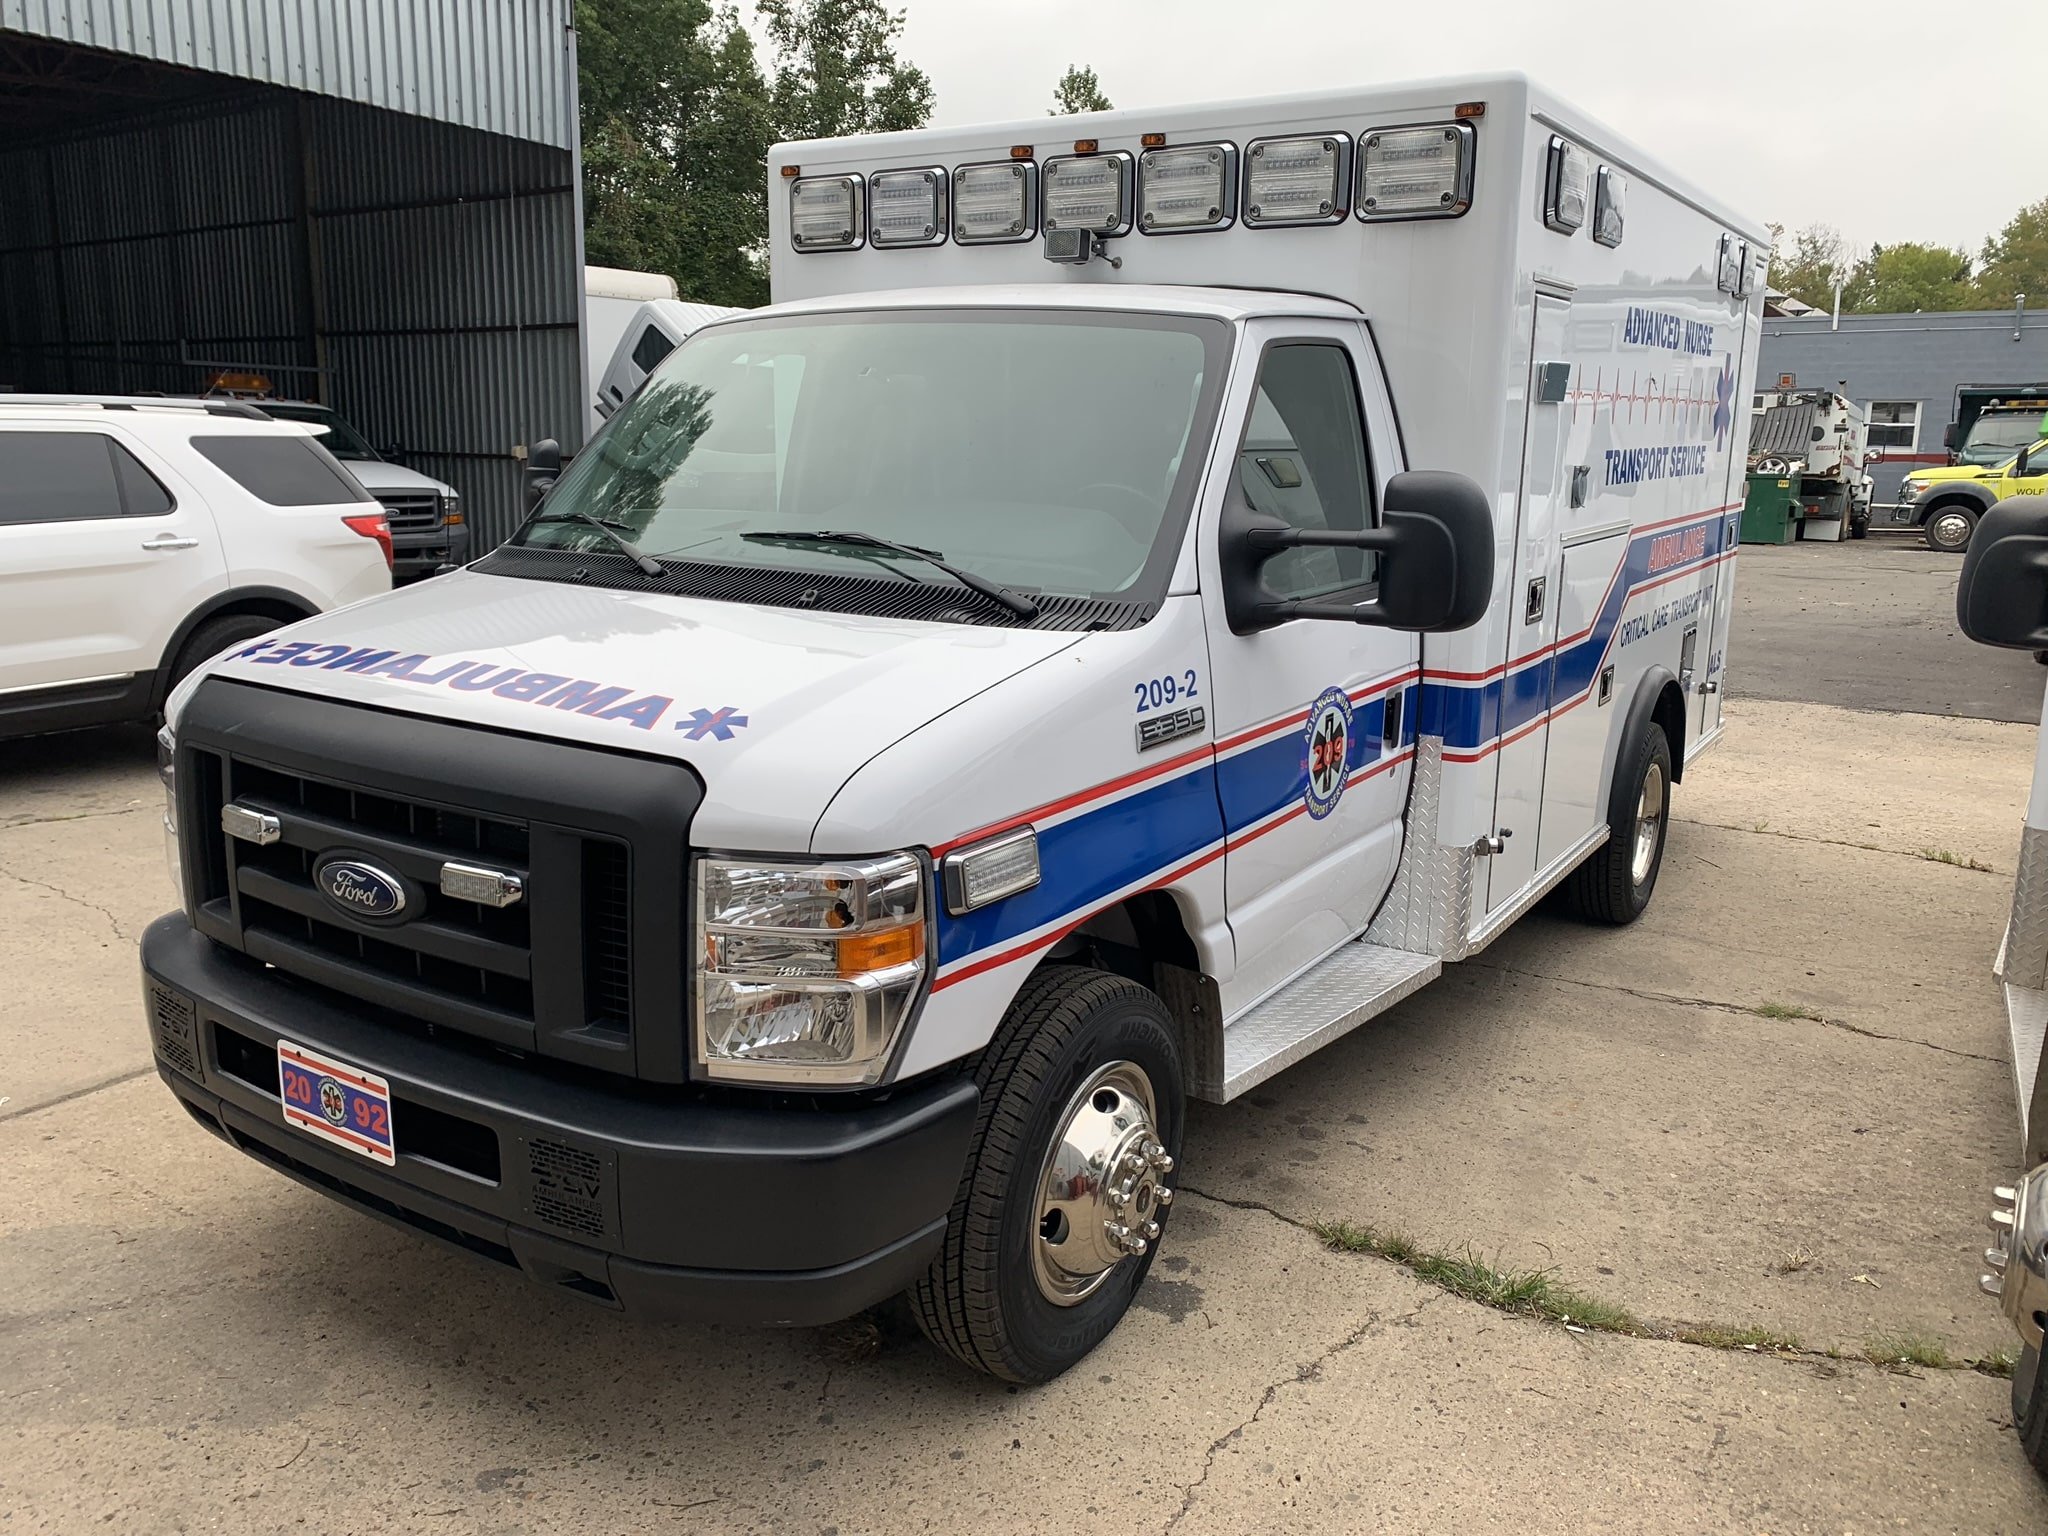 4x4 ambulance for sale